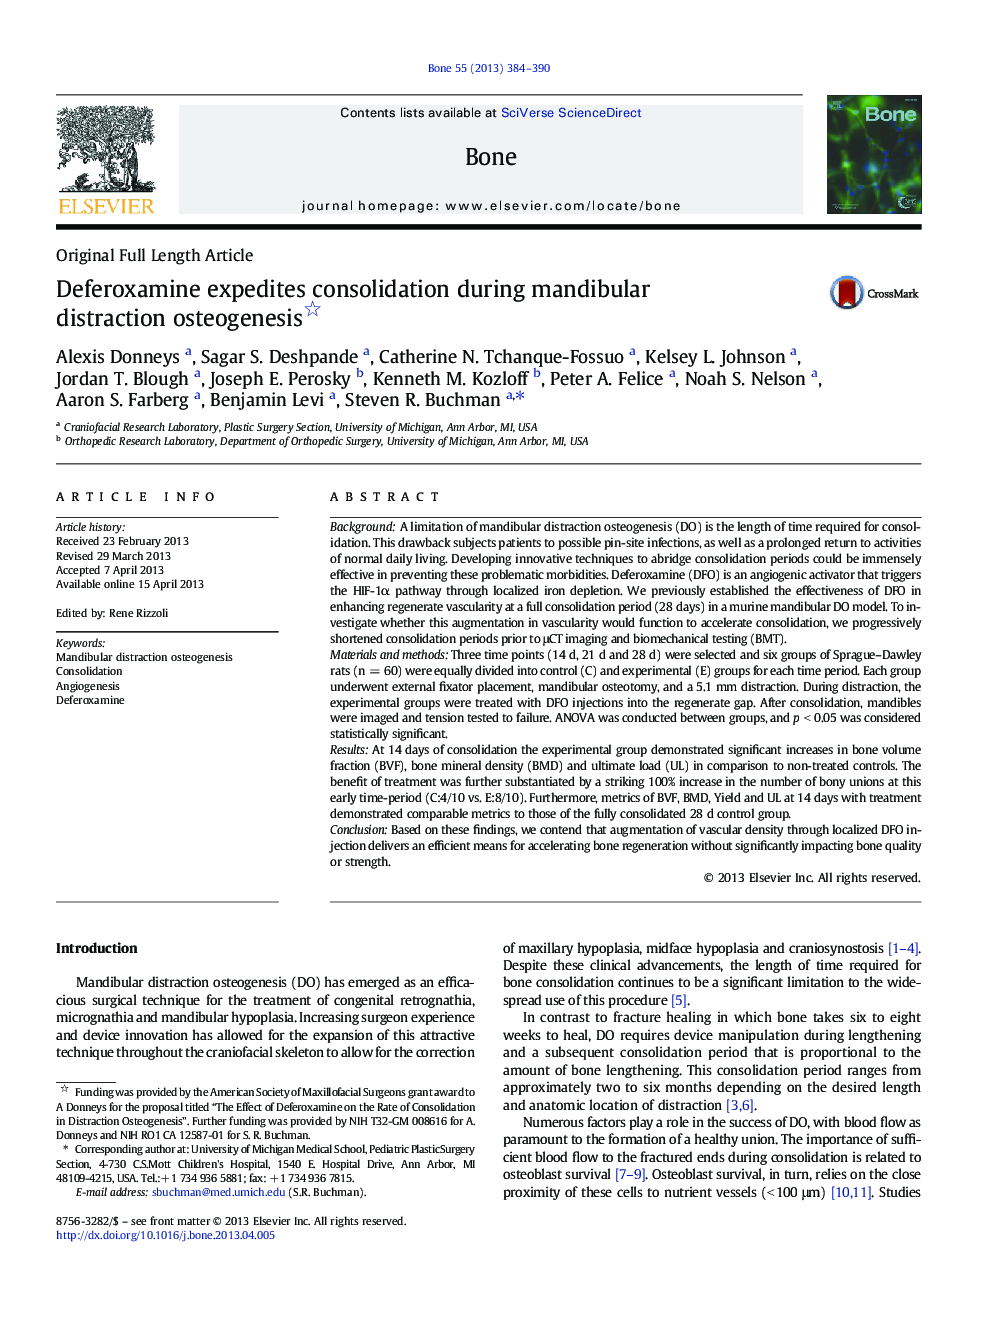 Deferoxamine expedites consolidation during mandibular distraction osteogenesis 